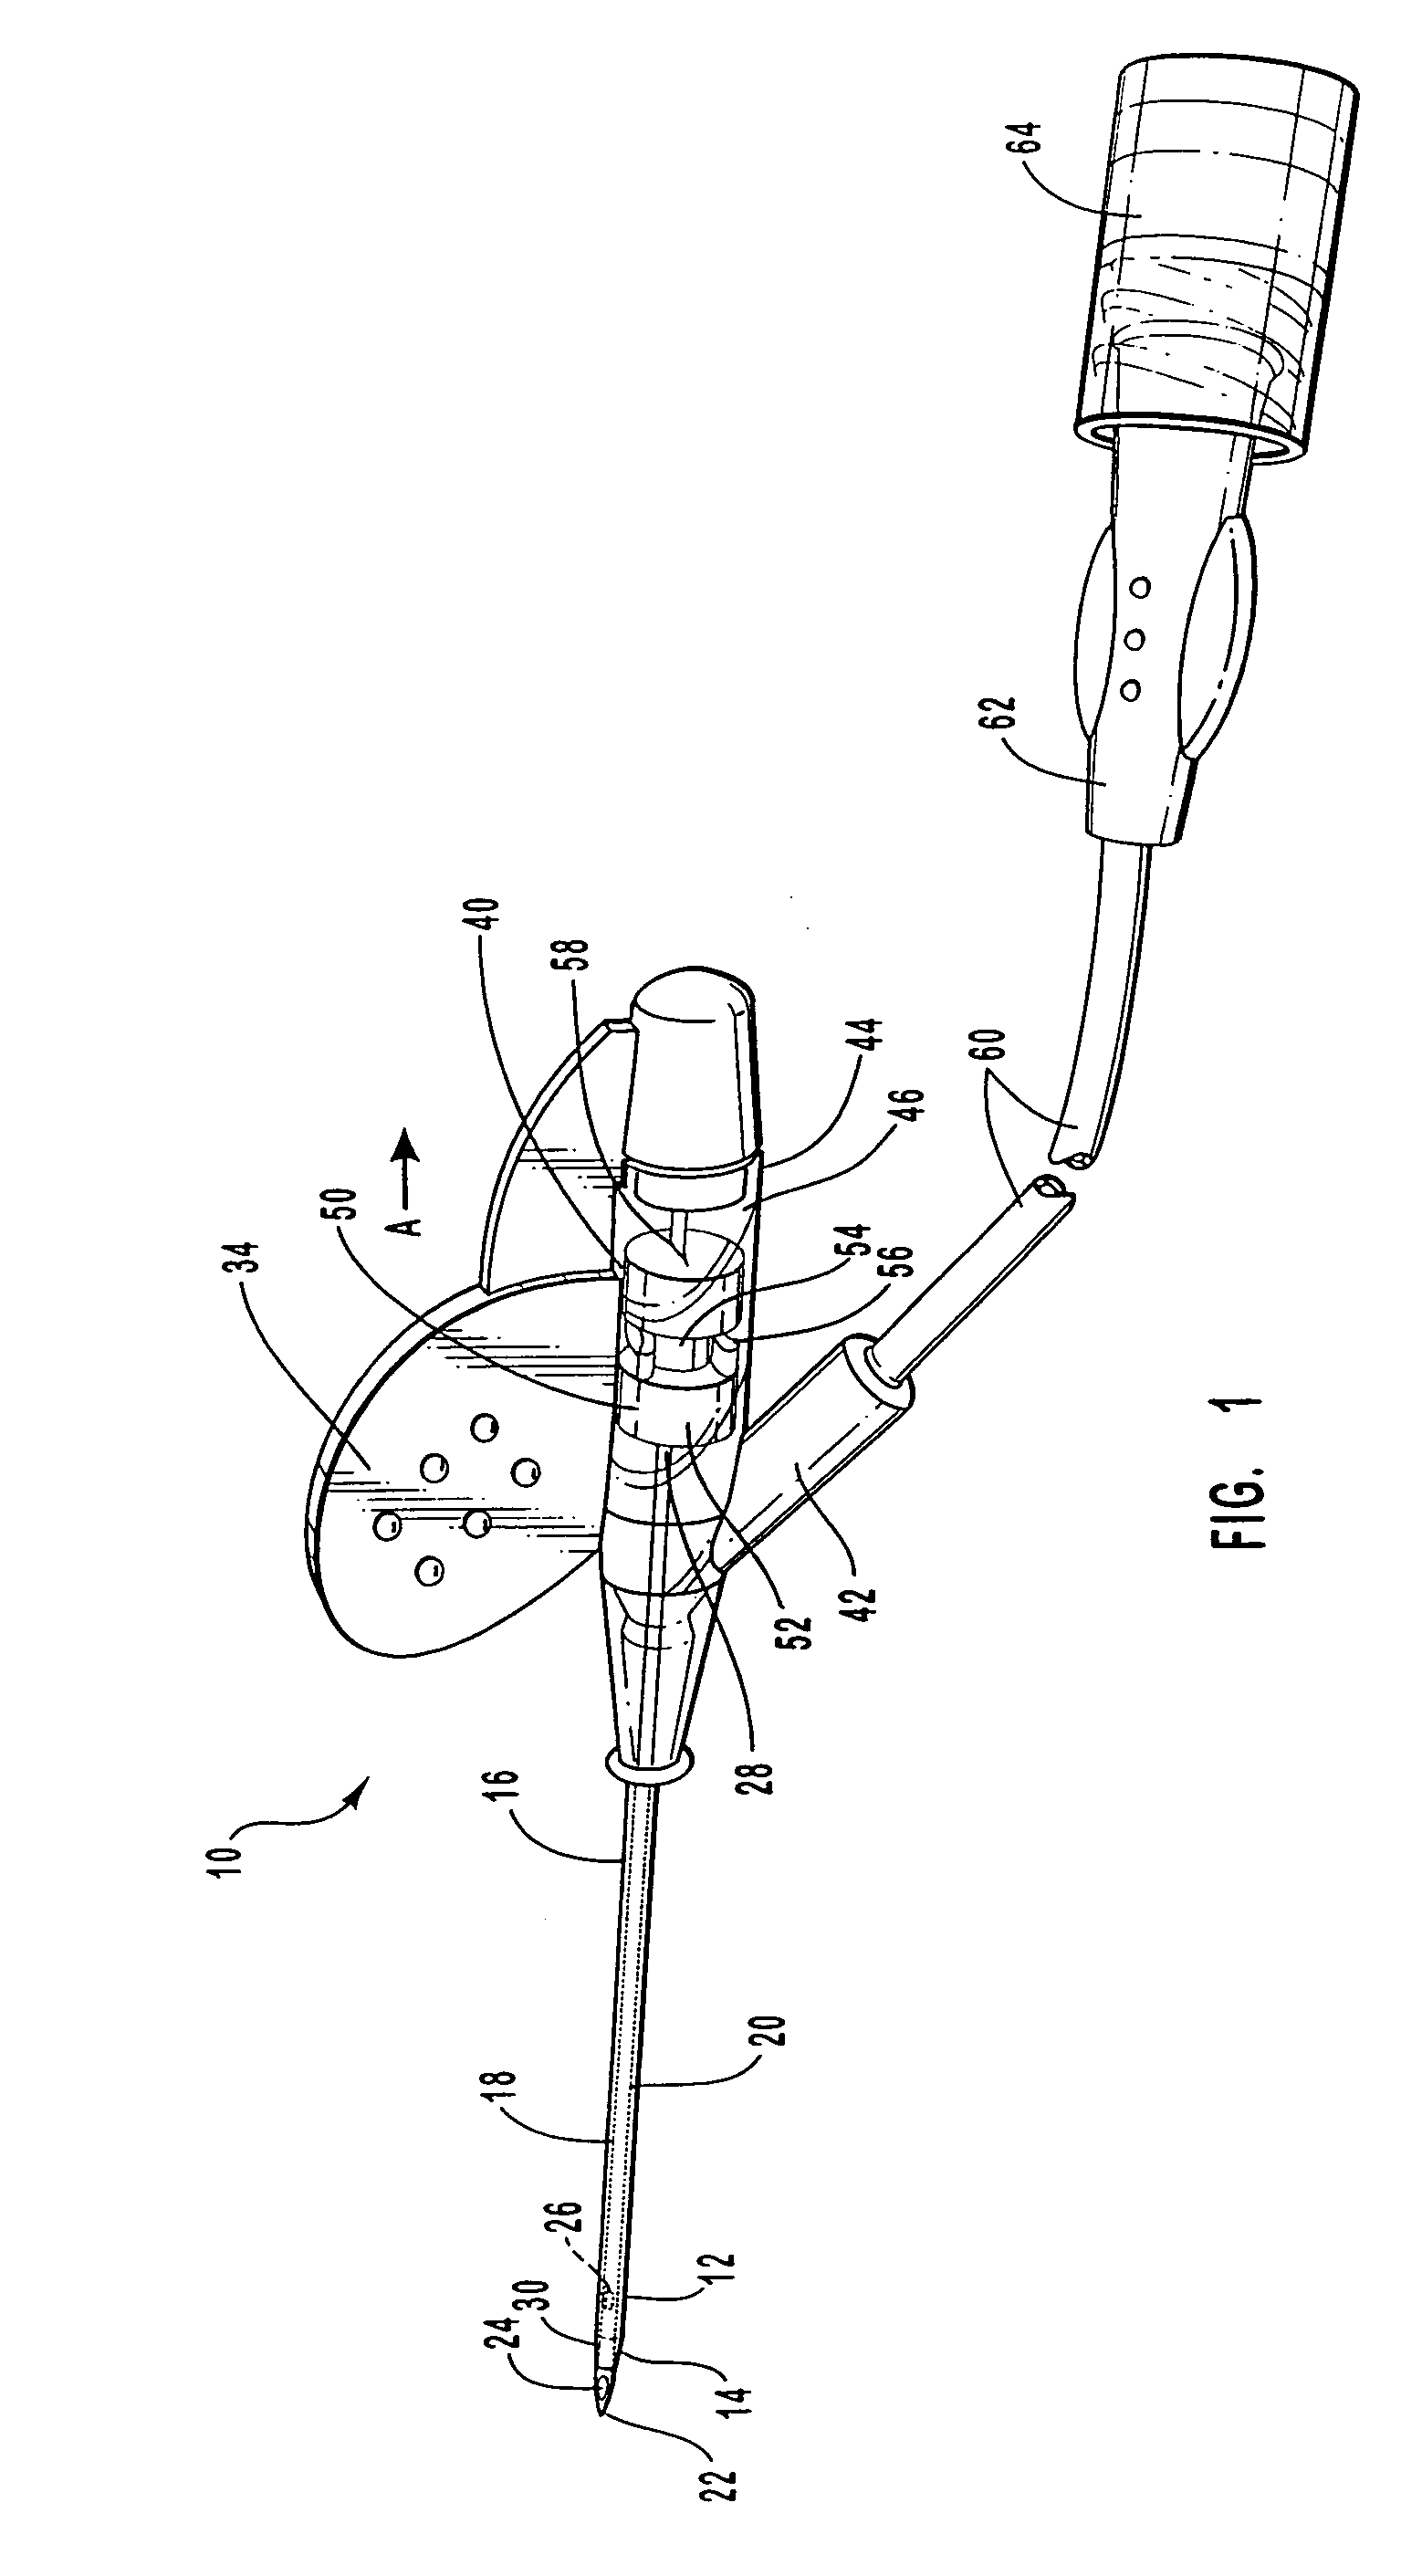 Vascular access device